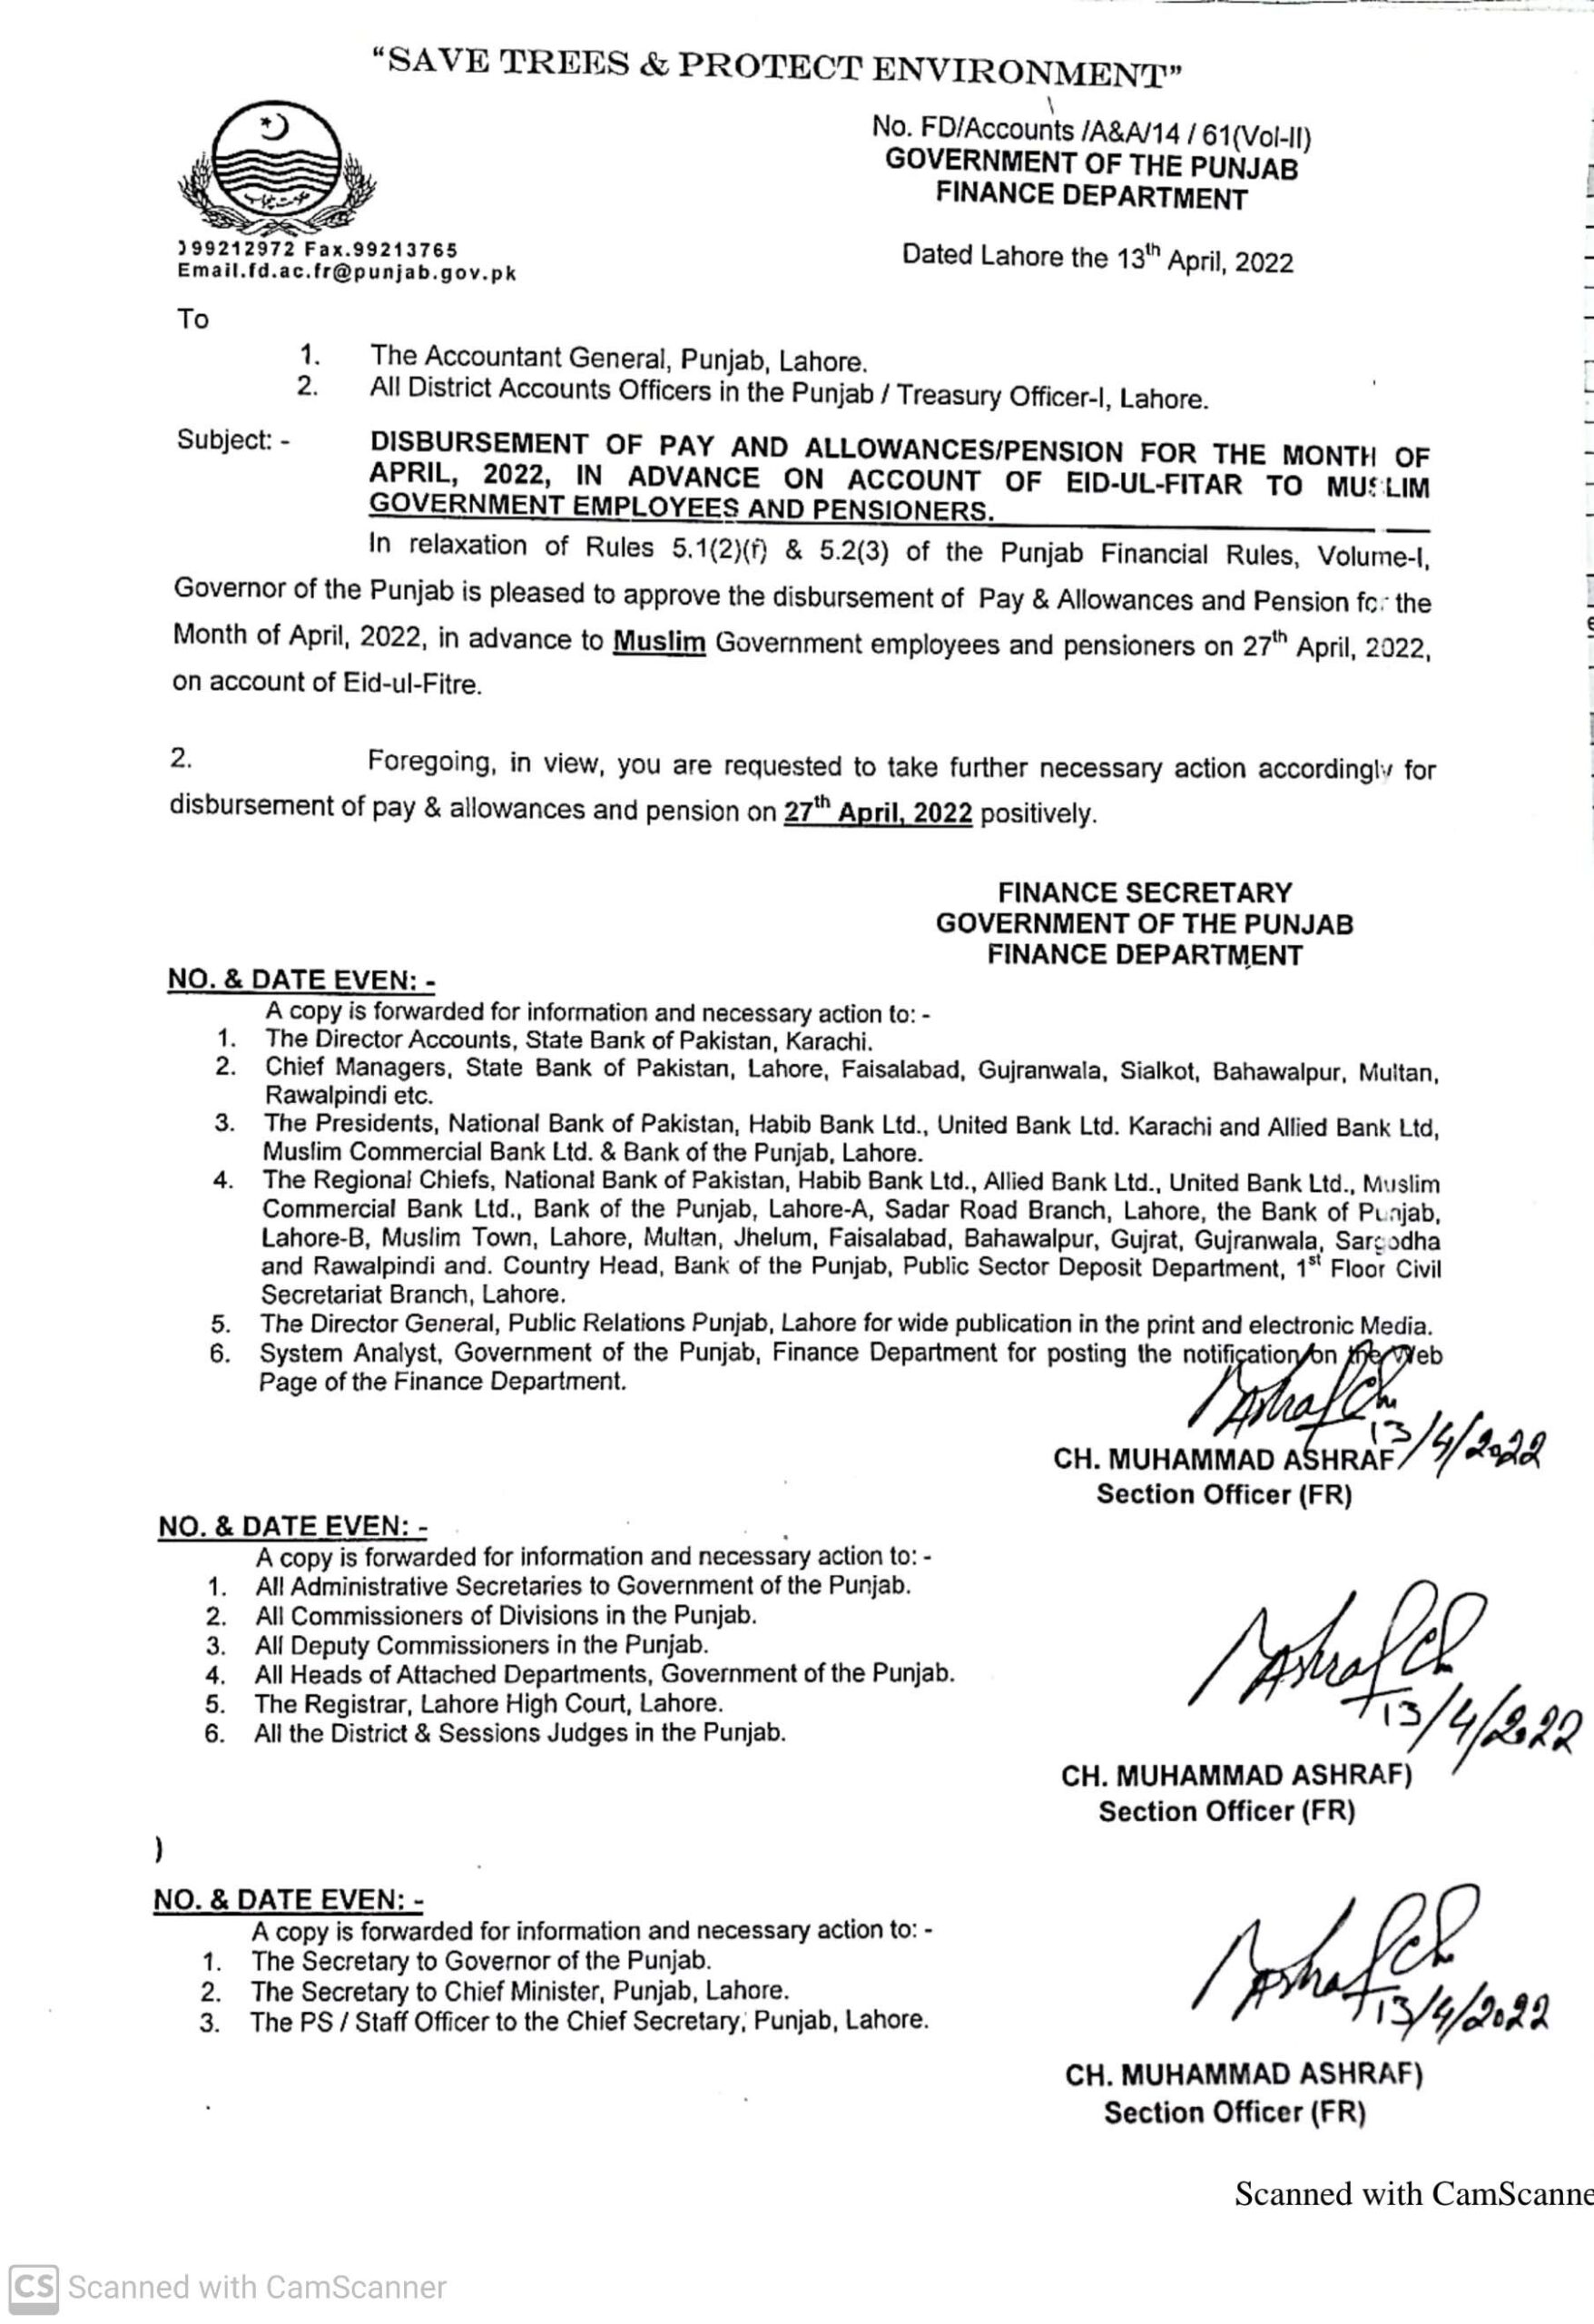 Disbursement Pay and Pension April 2022 in Advance Punjab